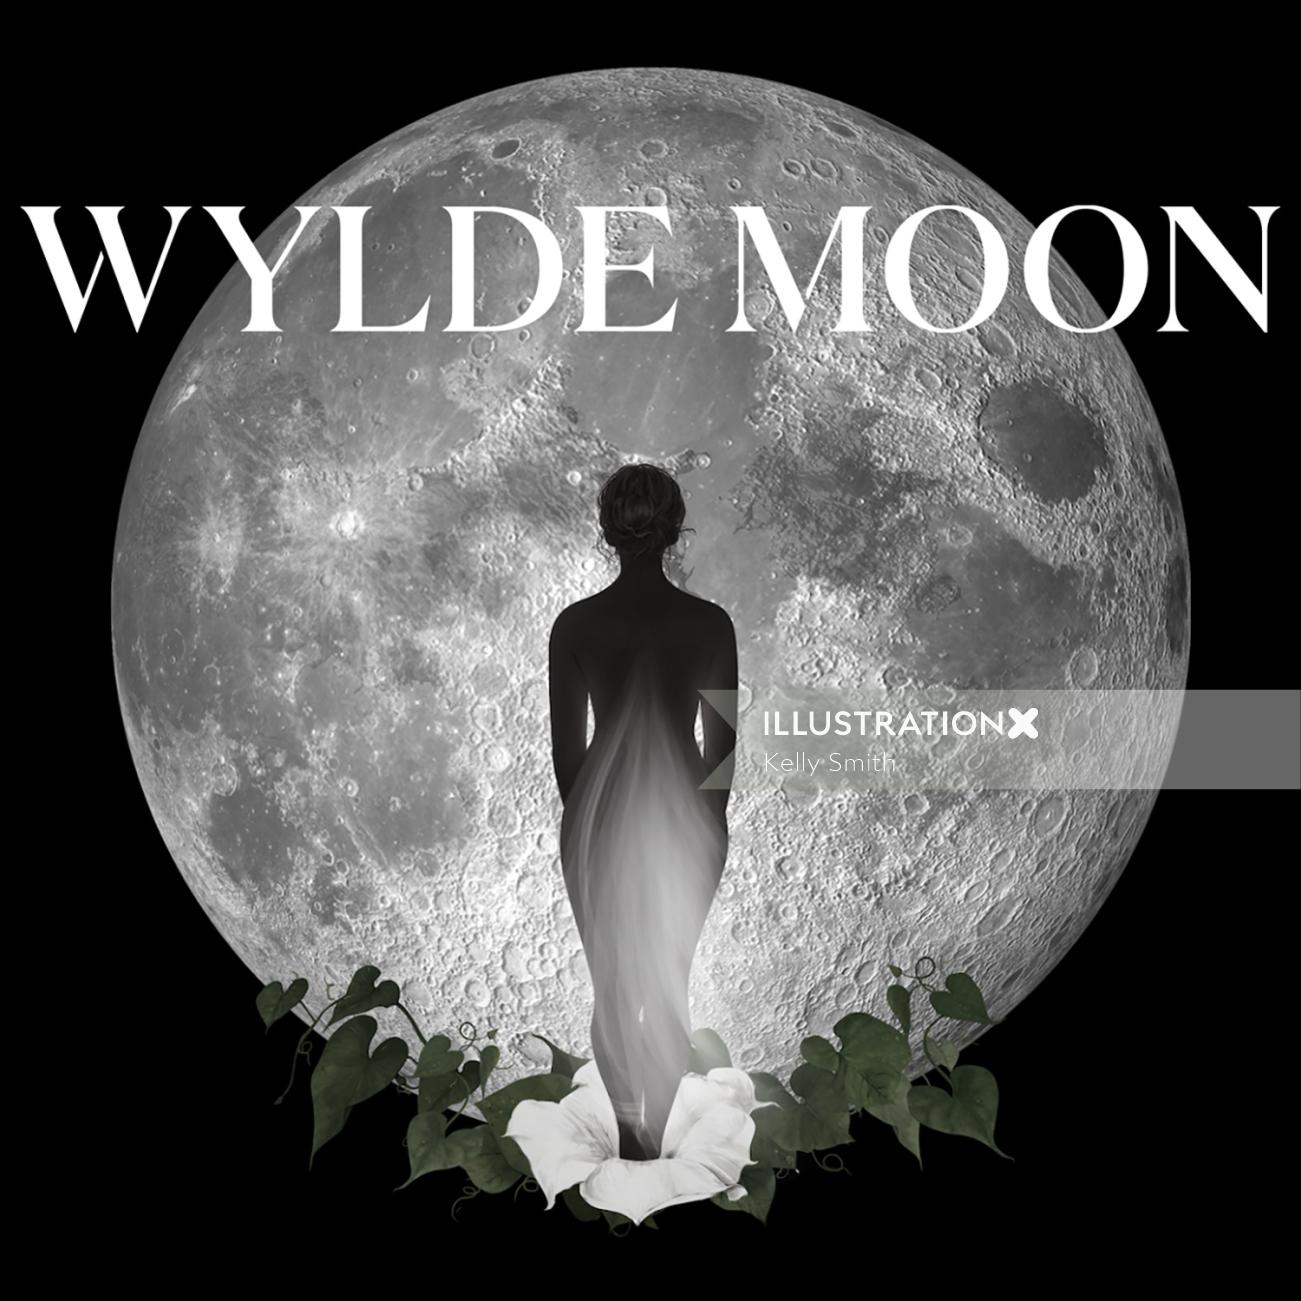 Illustration for Wylde Moon' website